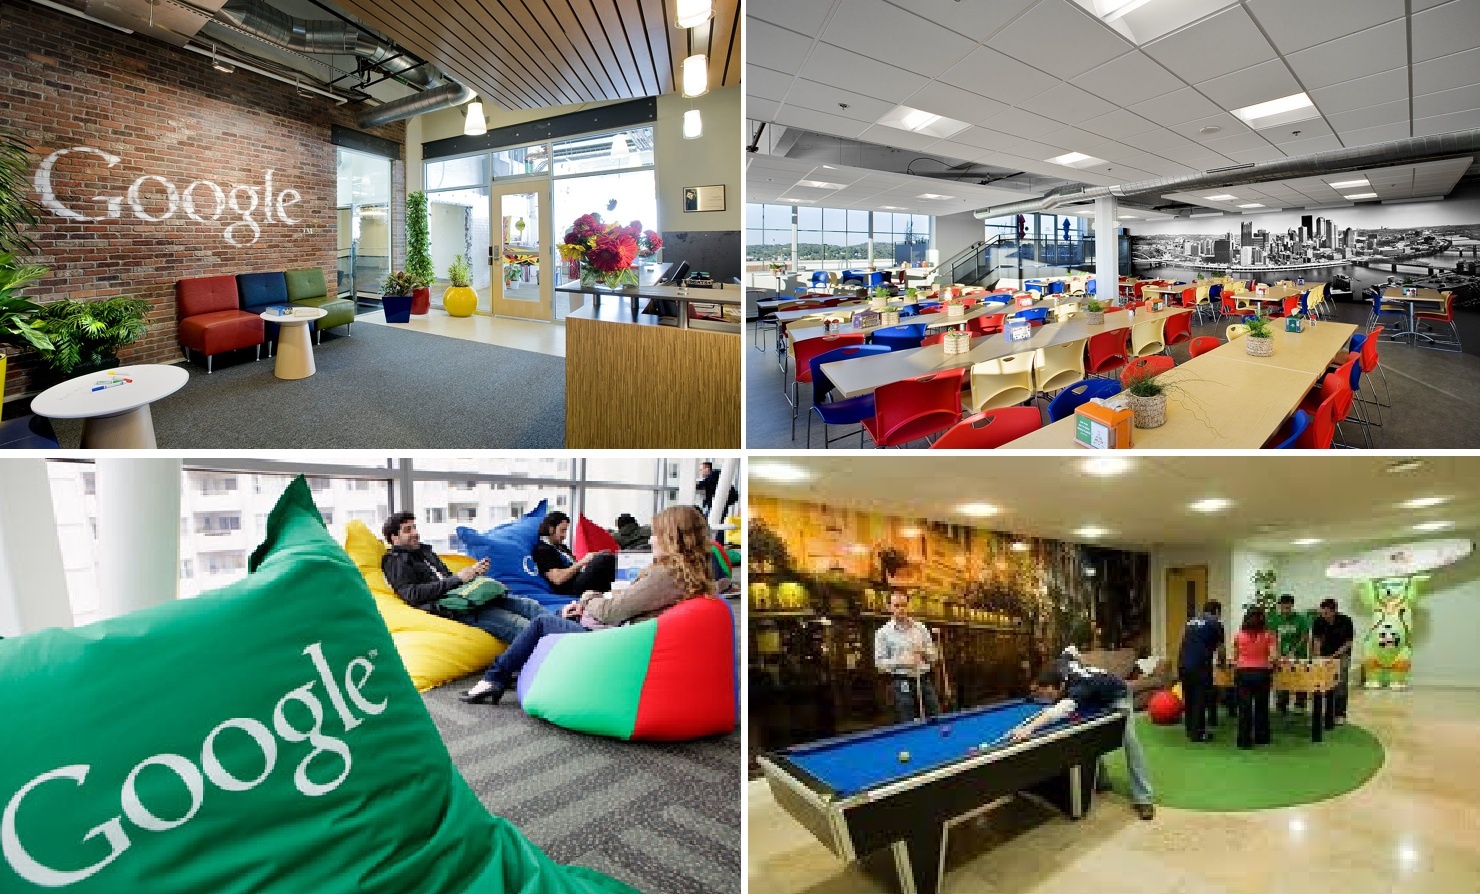 Google PGH office